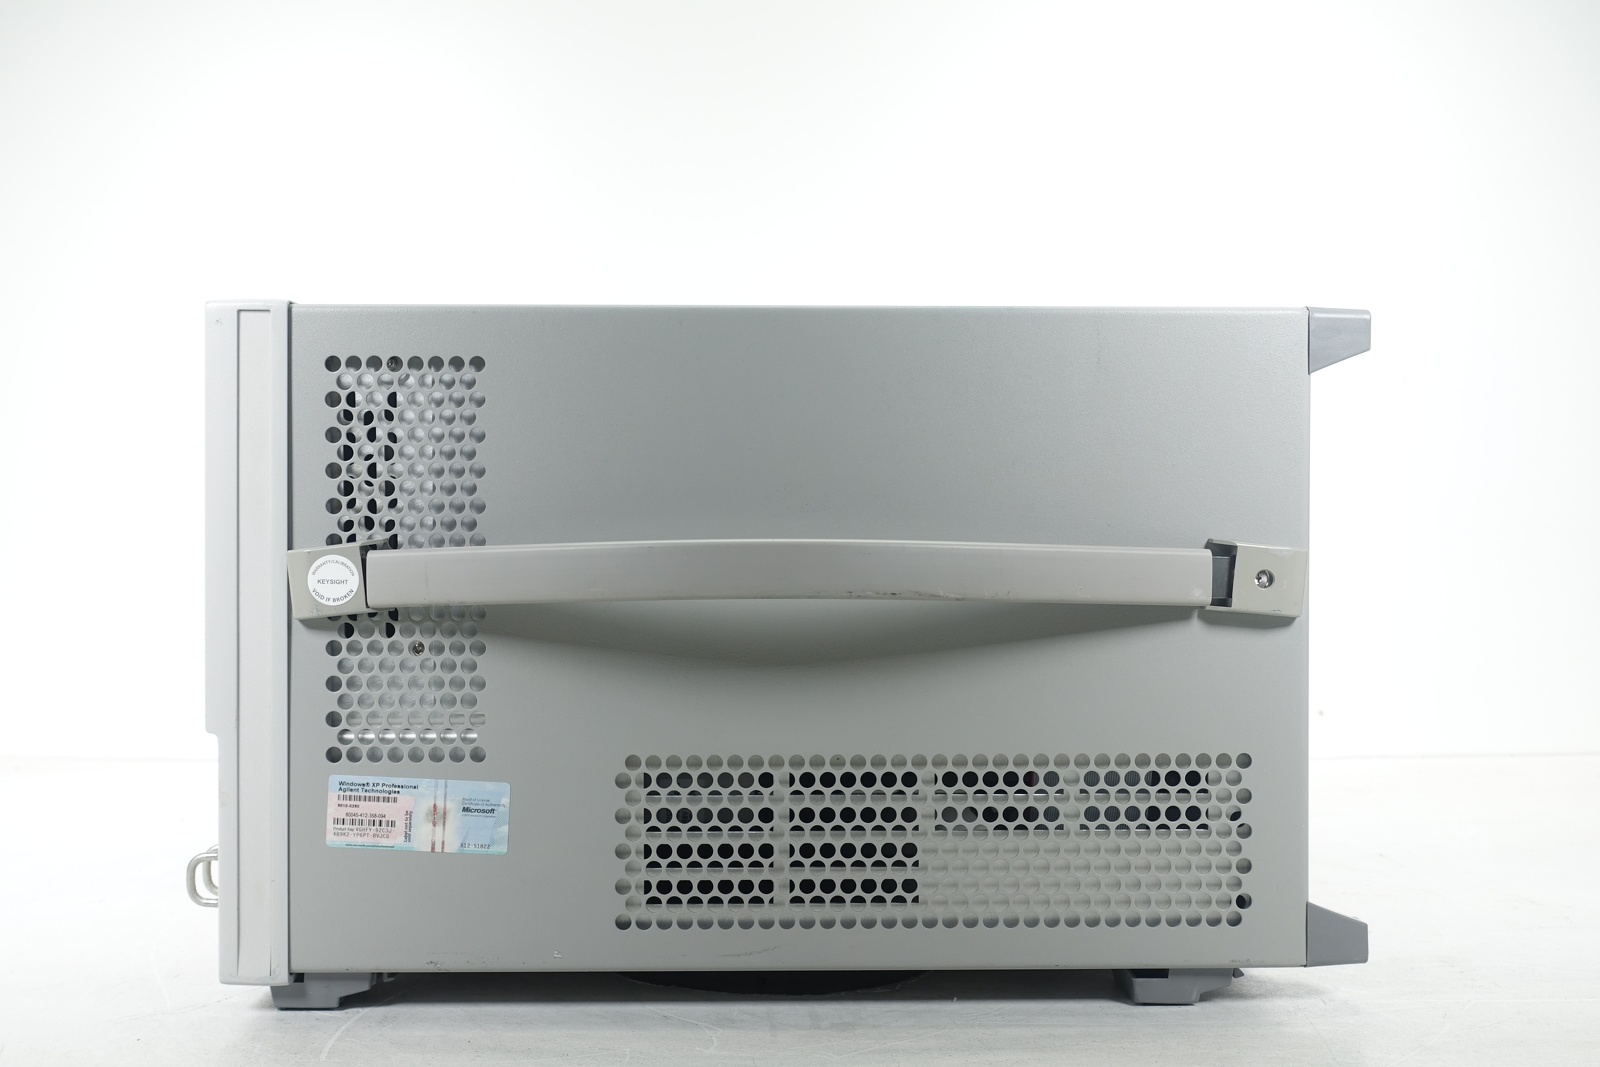 Keysight N5230A-245 300 kHz to 20 GHz / 4-port / Configurable Test Set / Extended Power Range